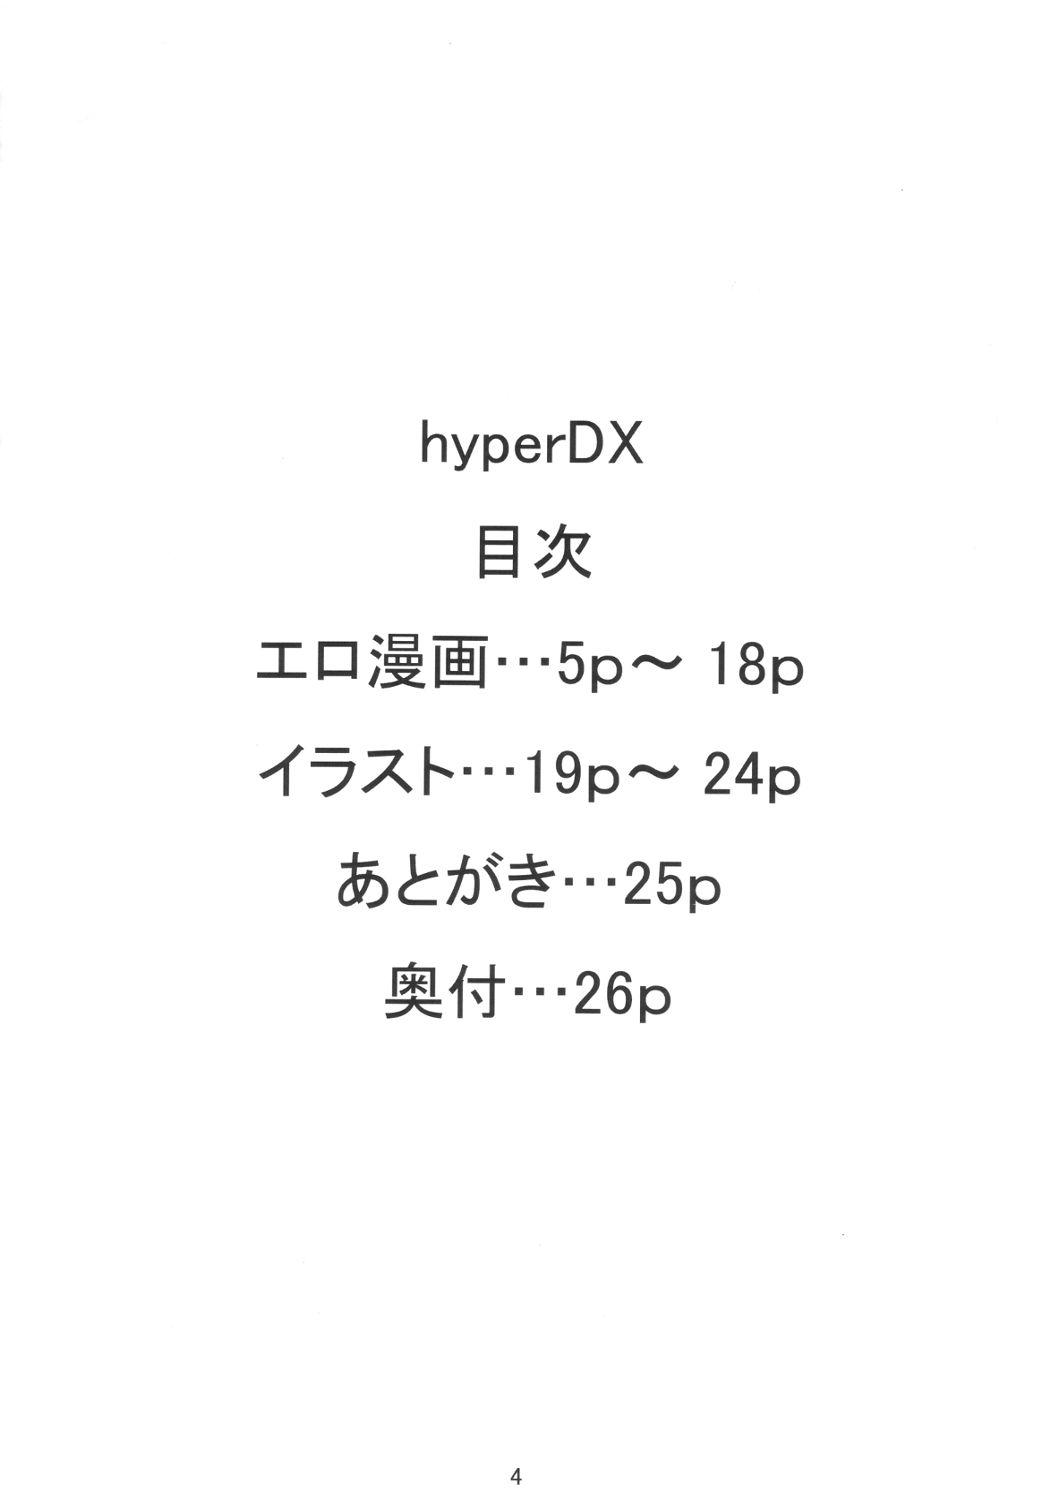 Hyper DX! 2